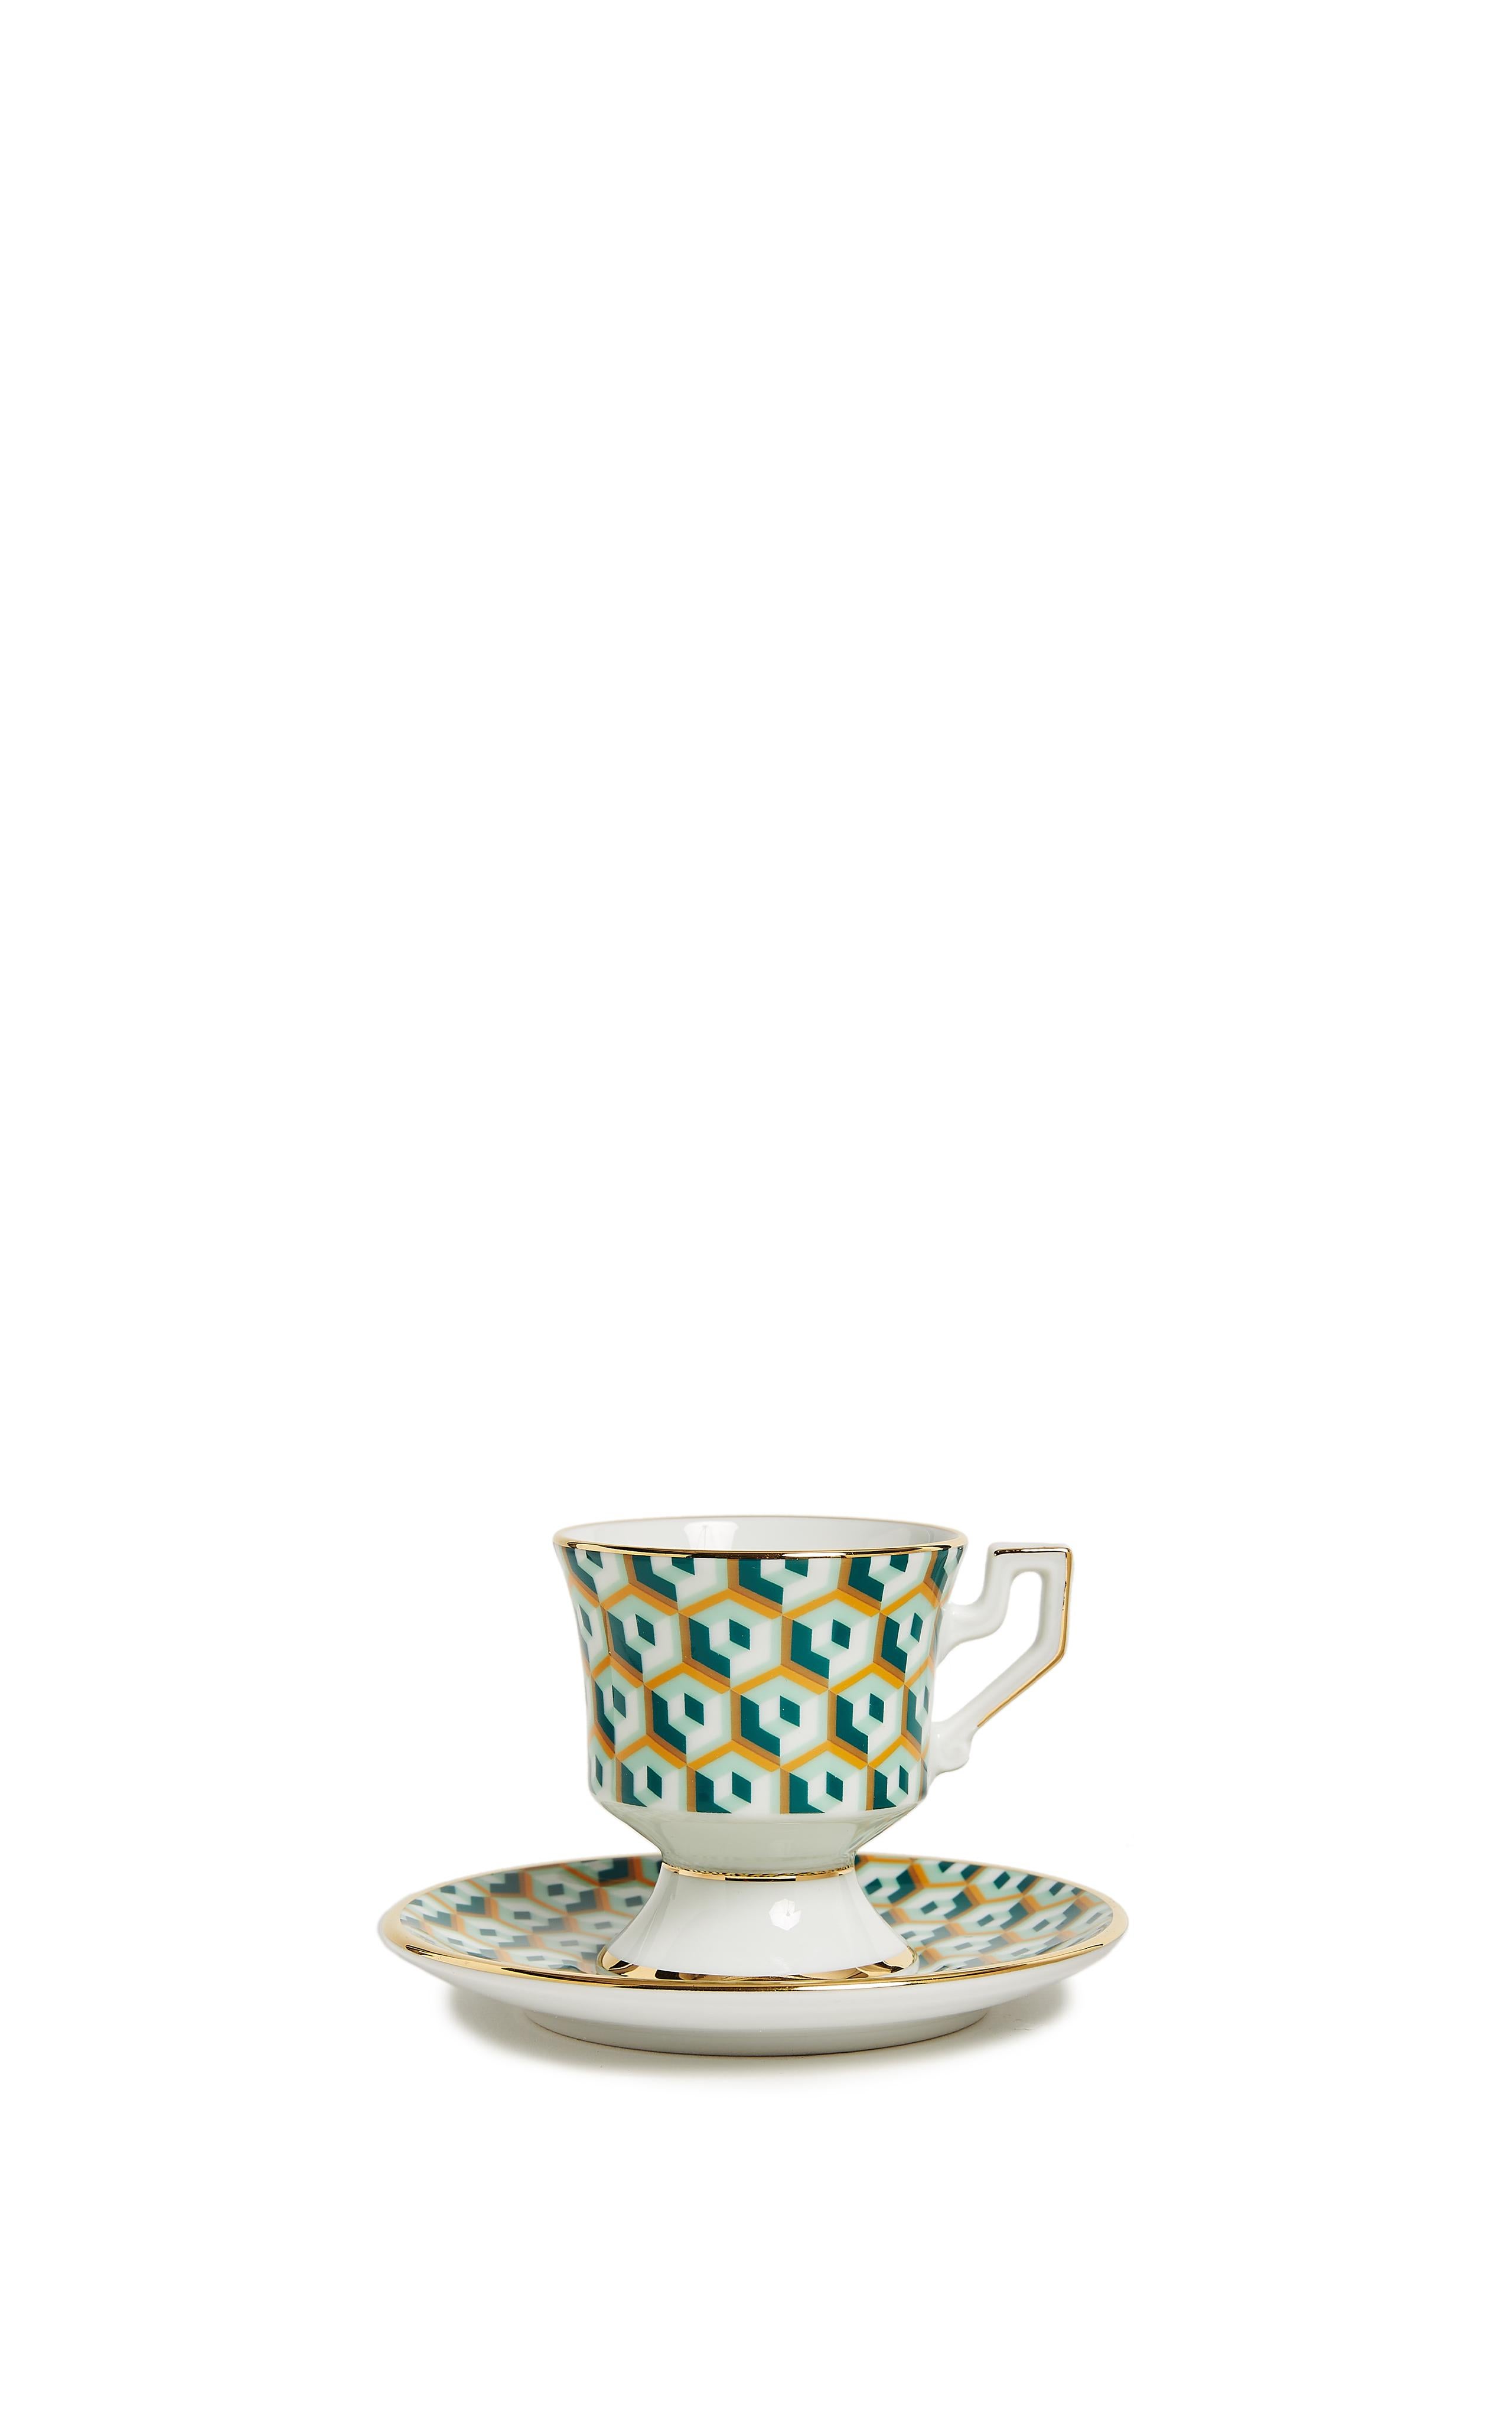 Italian Espresso Cup Set of 2 Cubi Verde Print, 100% Porcelain by La DoubleJ